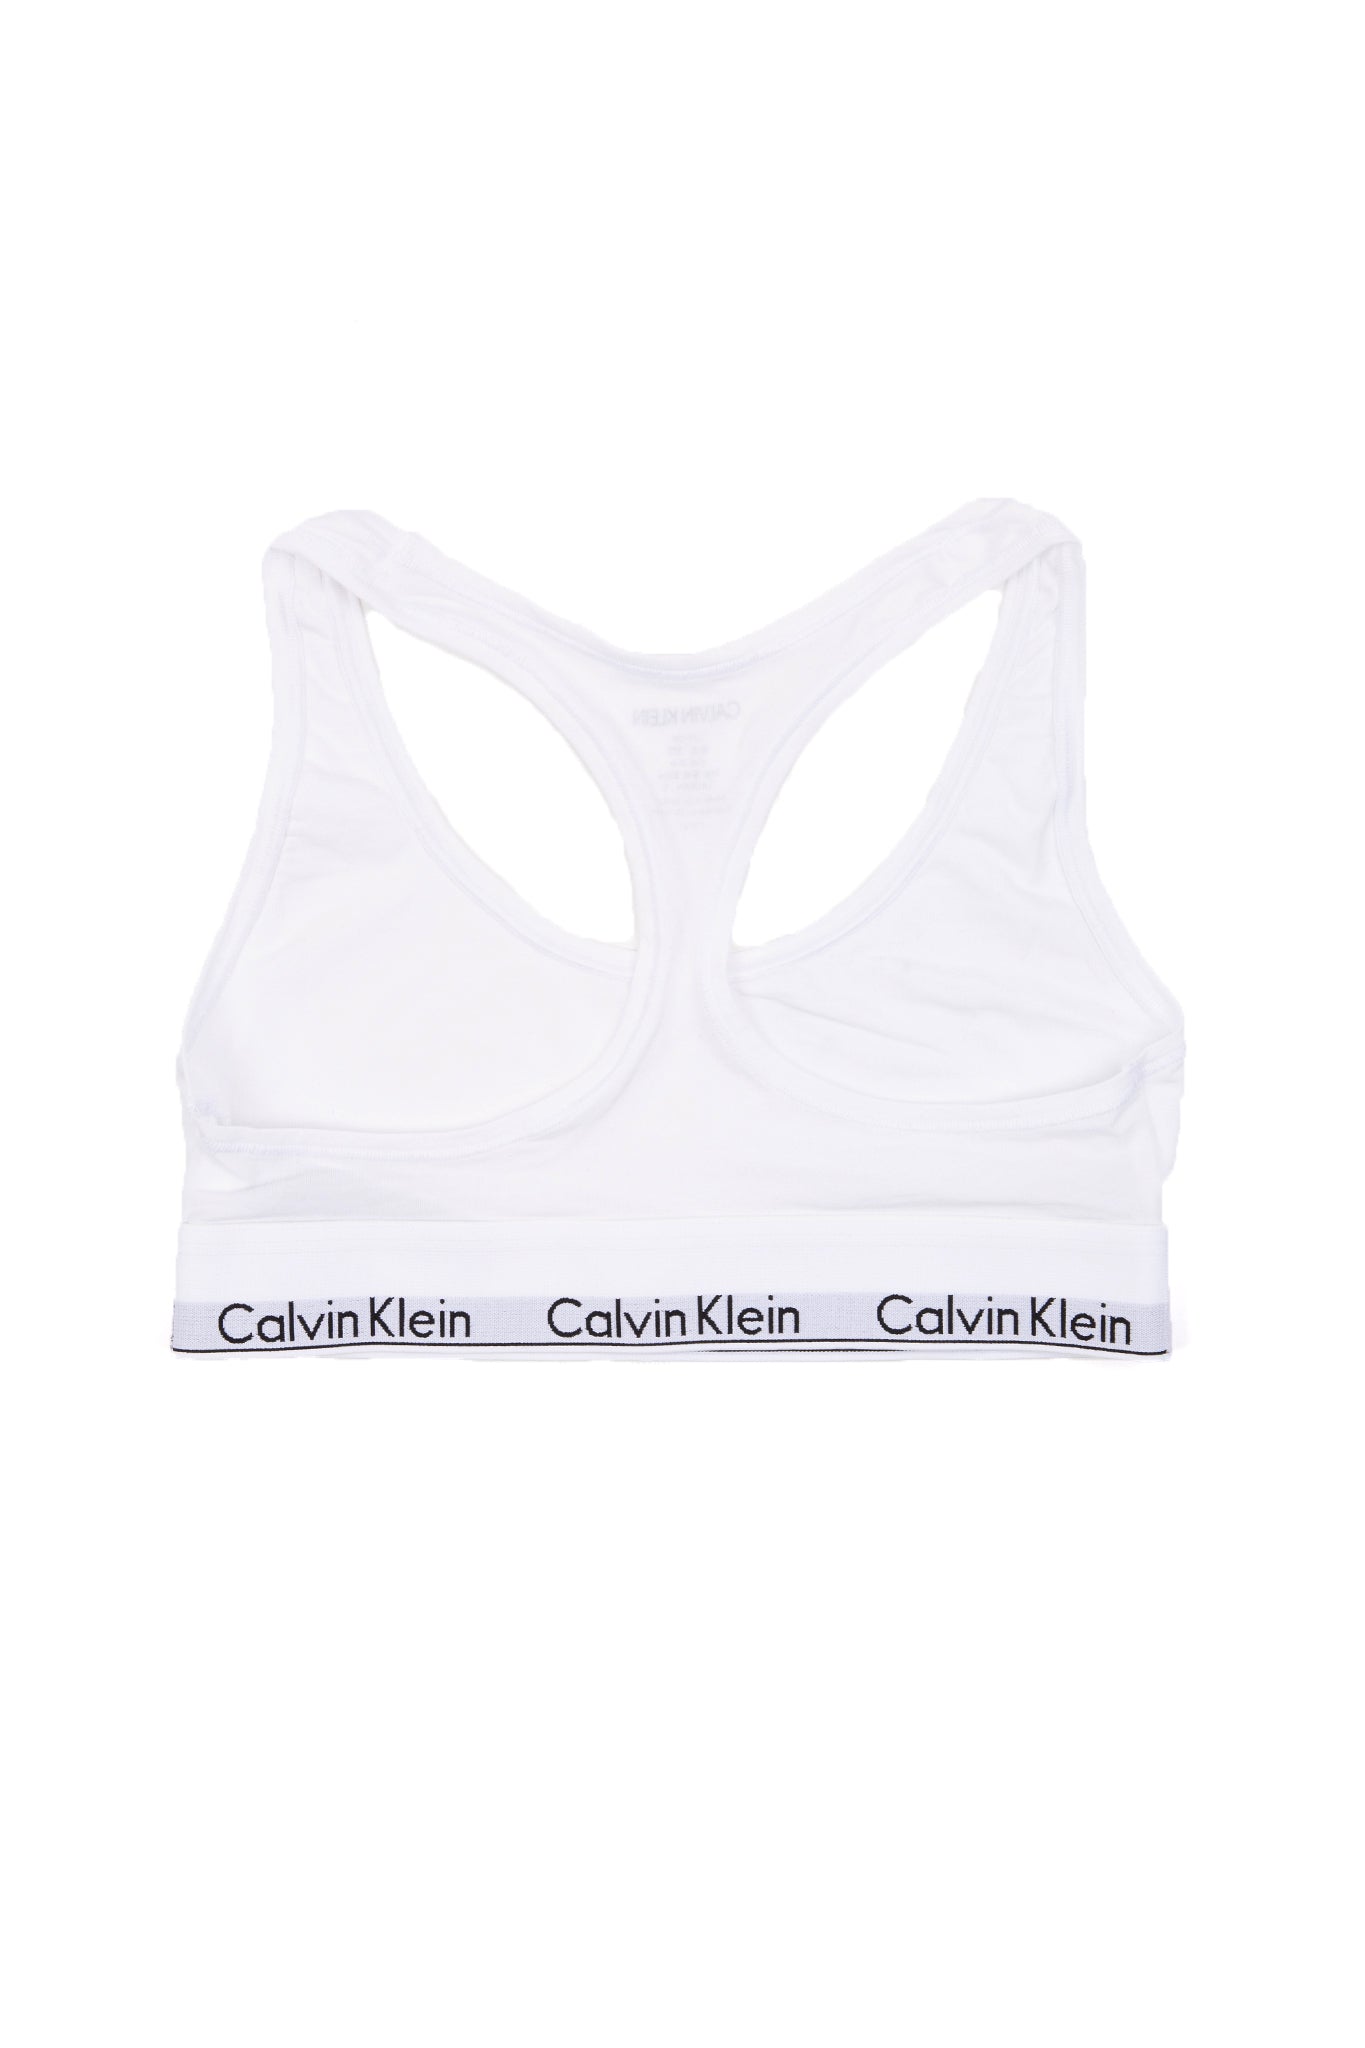 Calvin Klein Modern Cotton Bralette Black F3785 - Free Shipping at